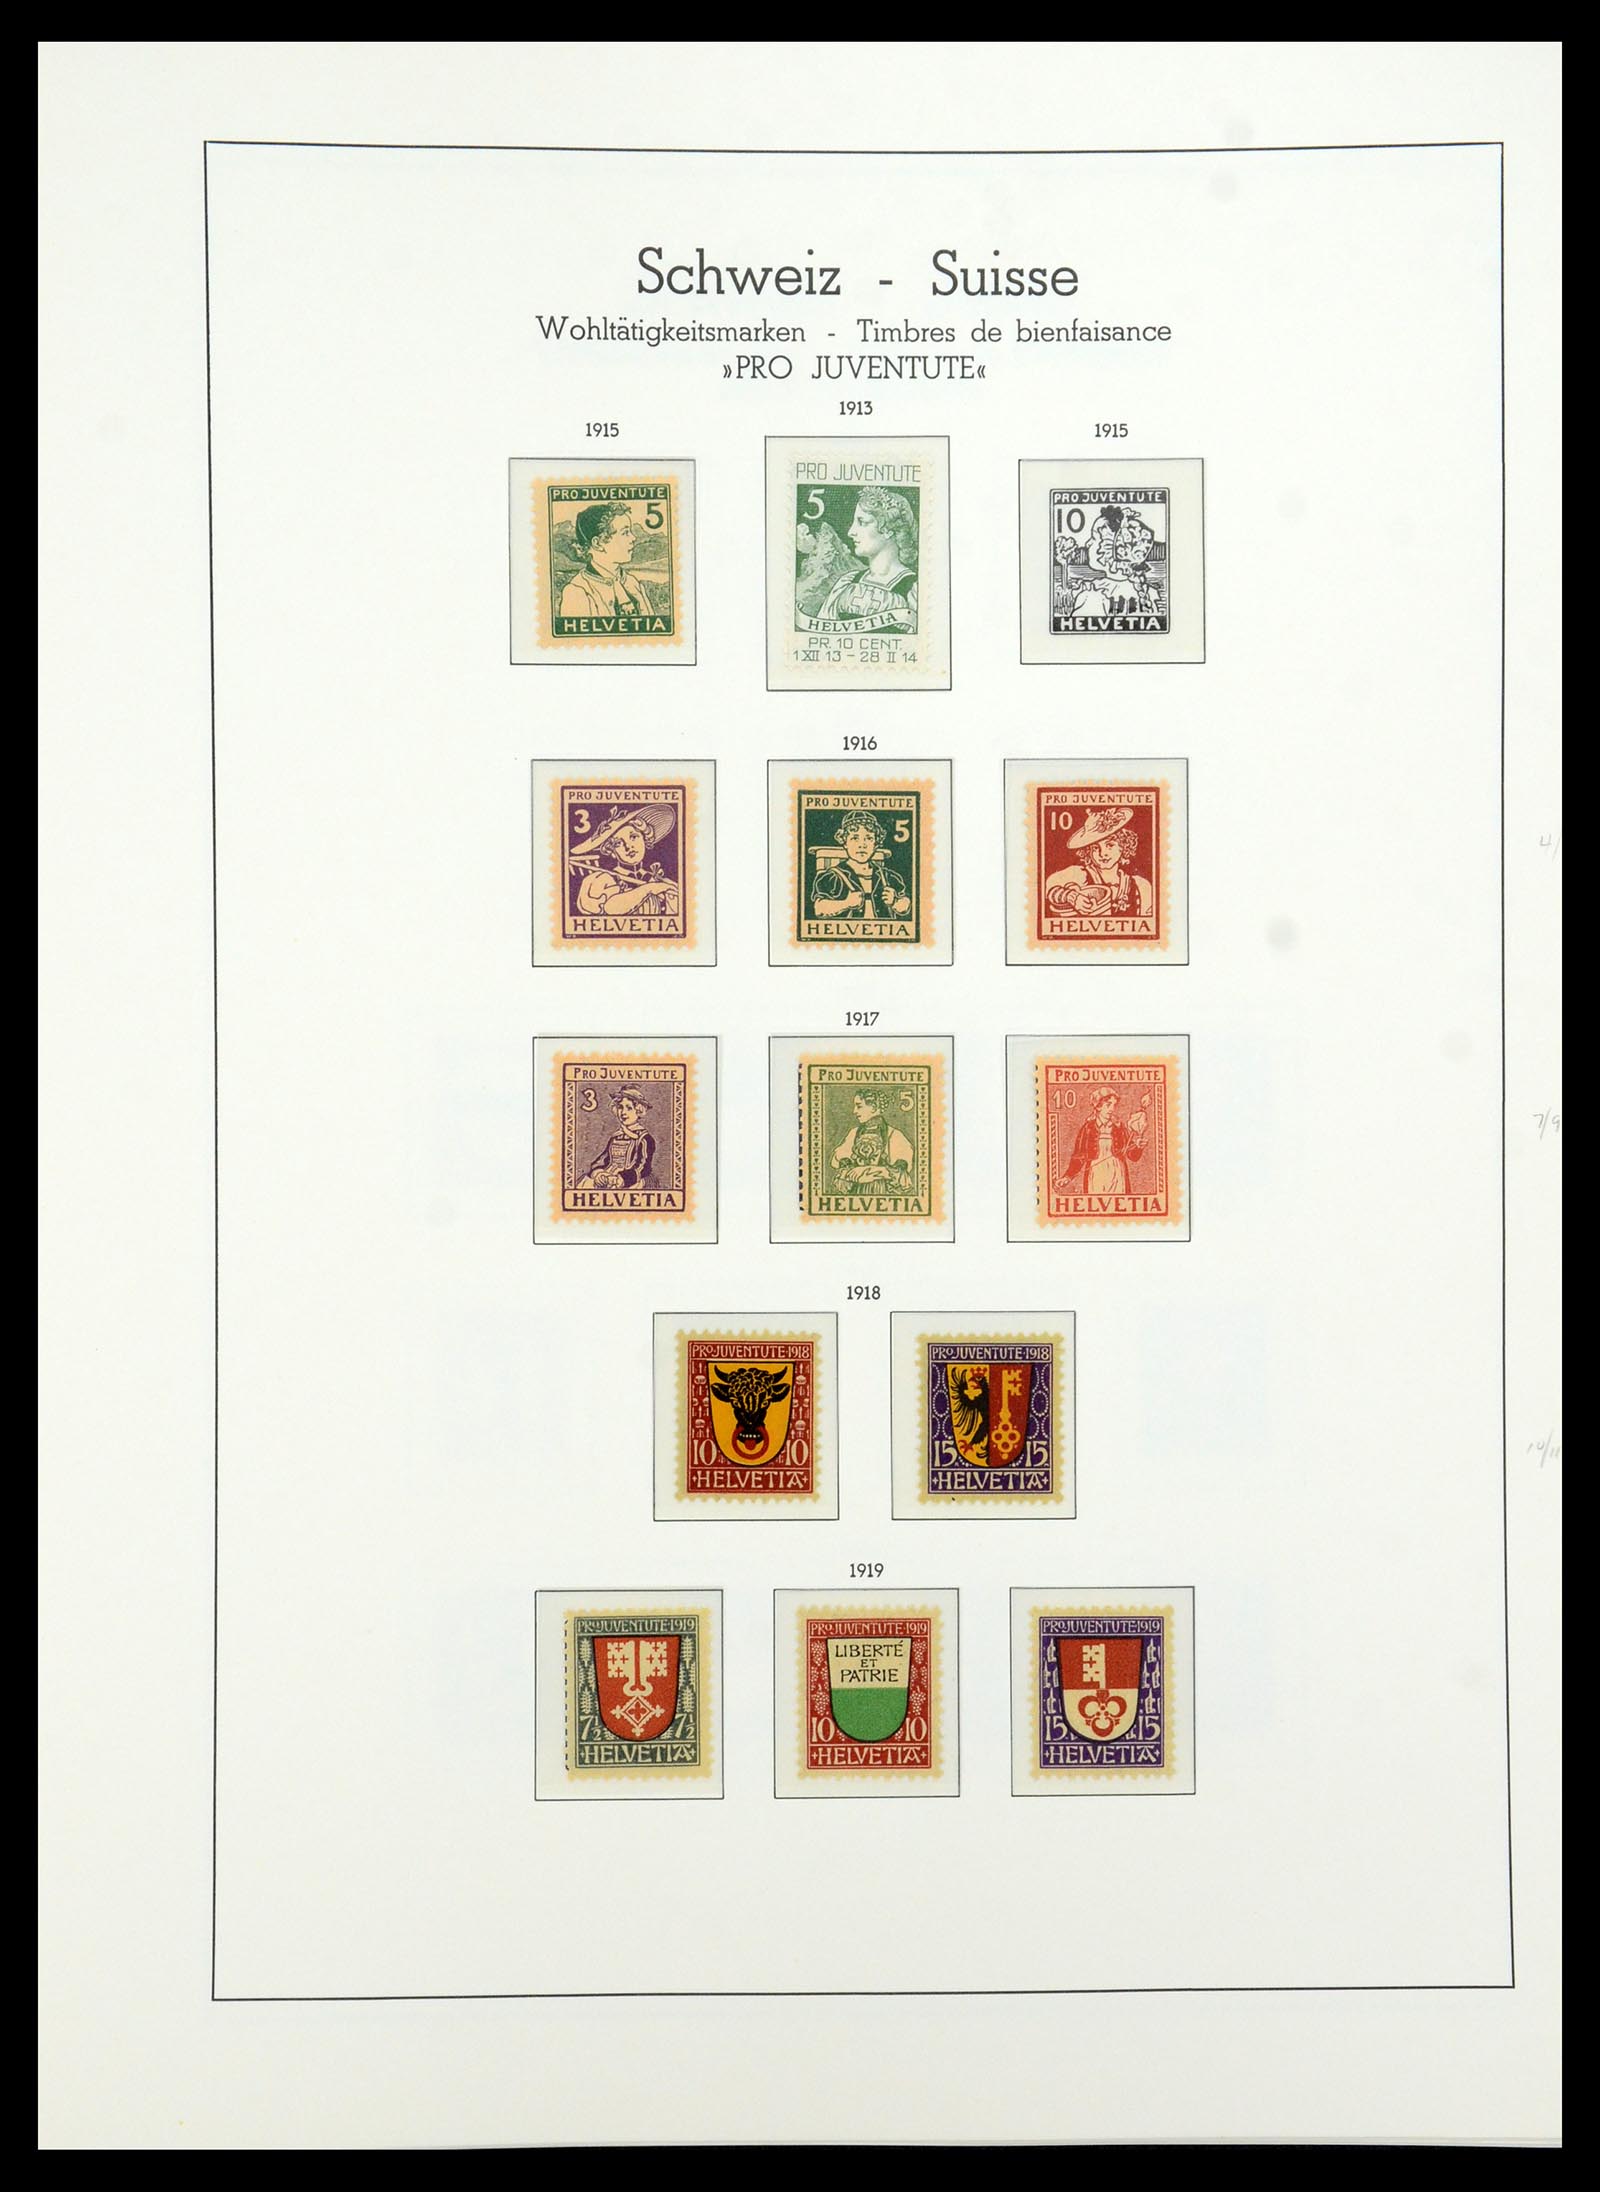 36284 033 - Stamp collection 36284 Switzerland 1854-2006.